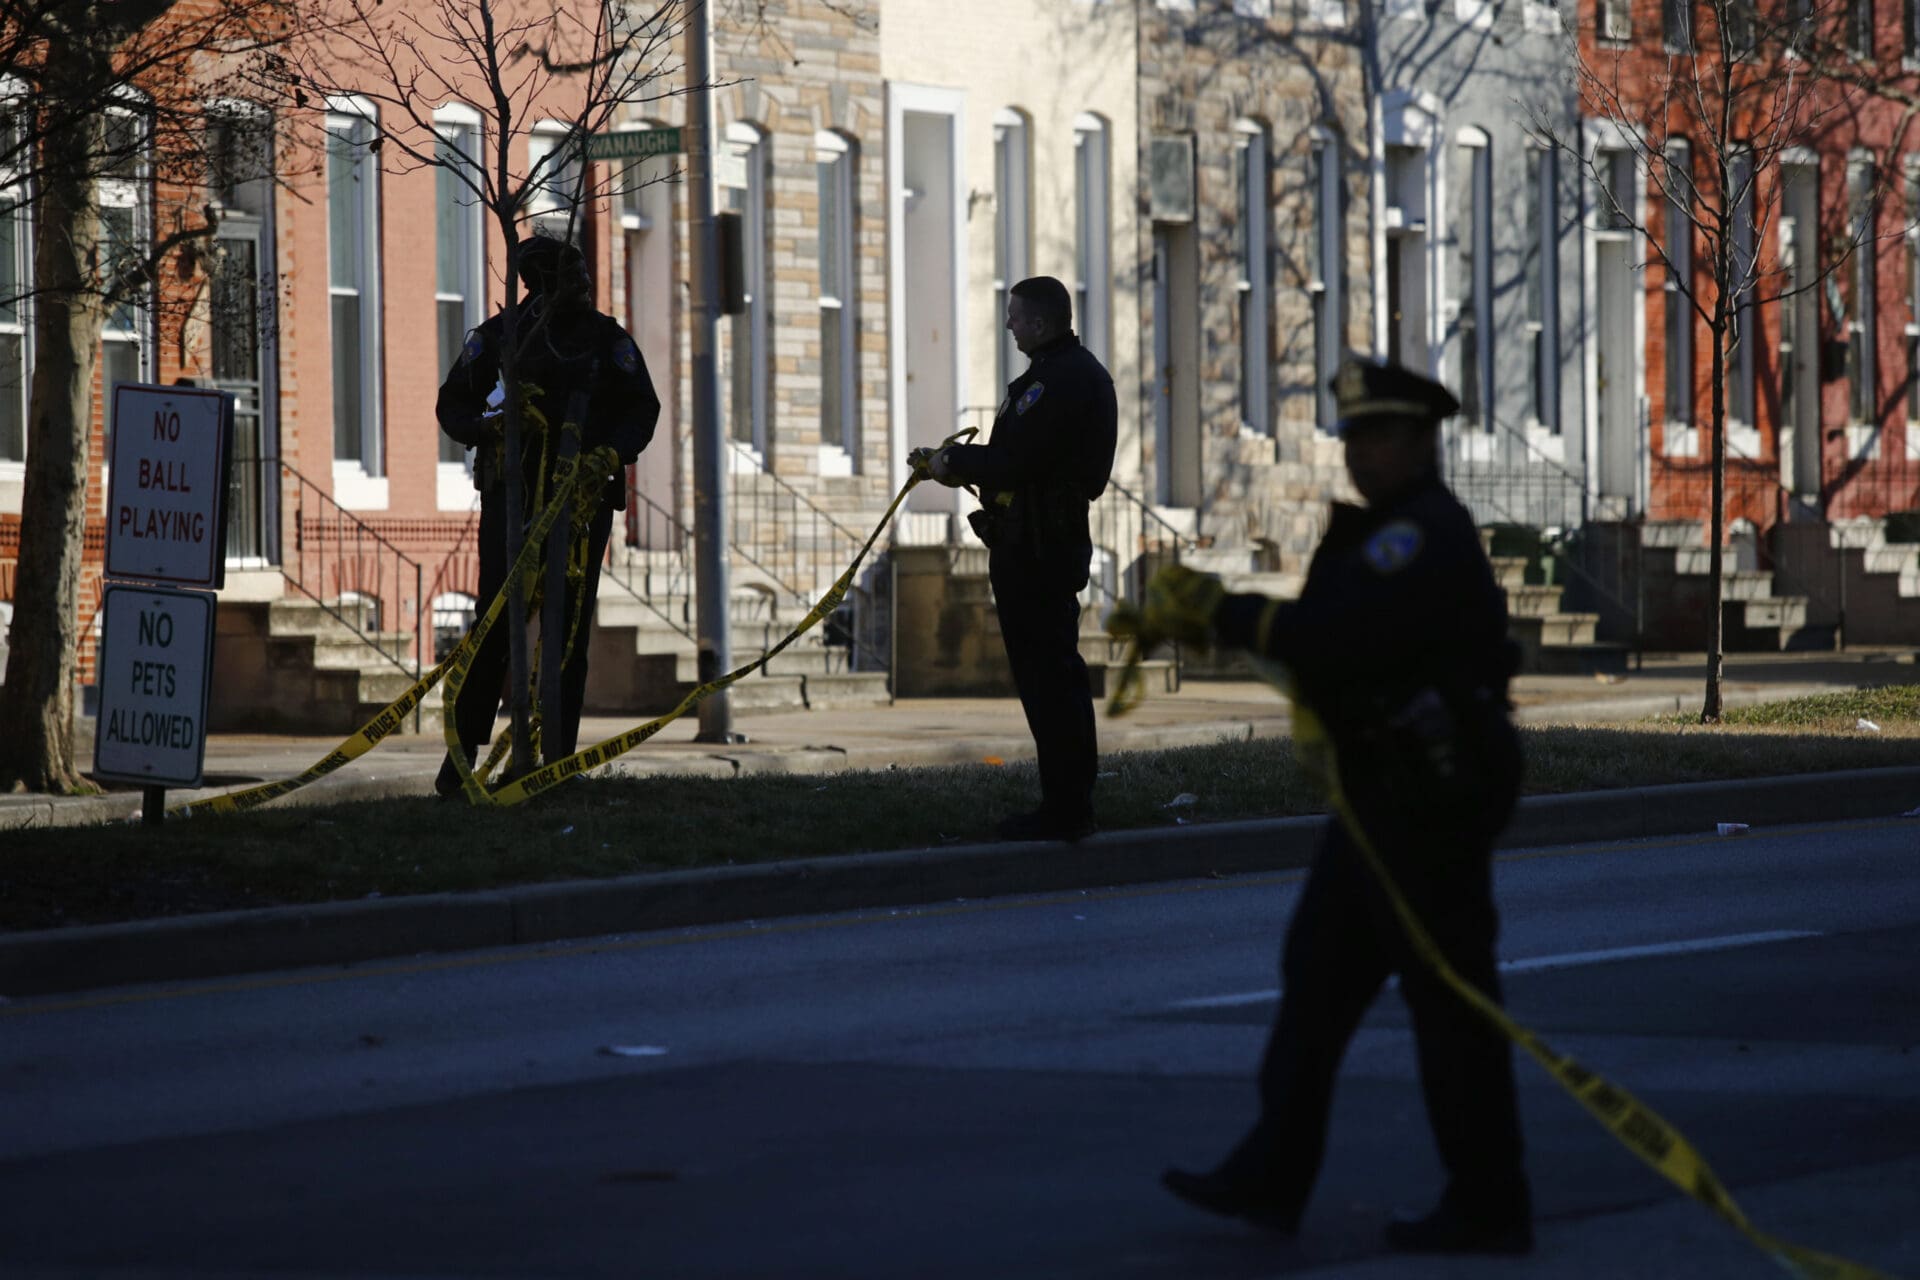 Baltimore shooing crime scene police